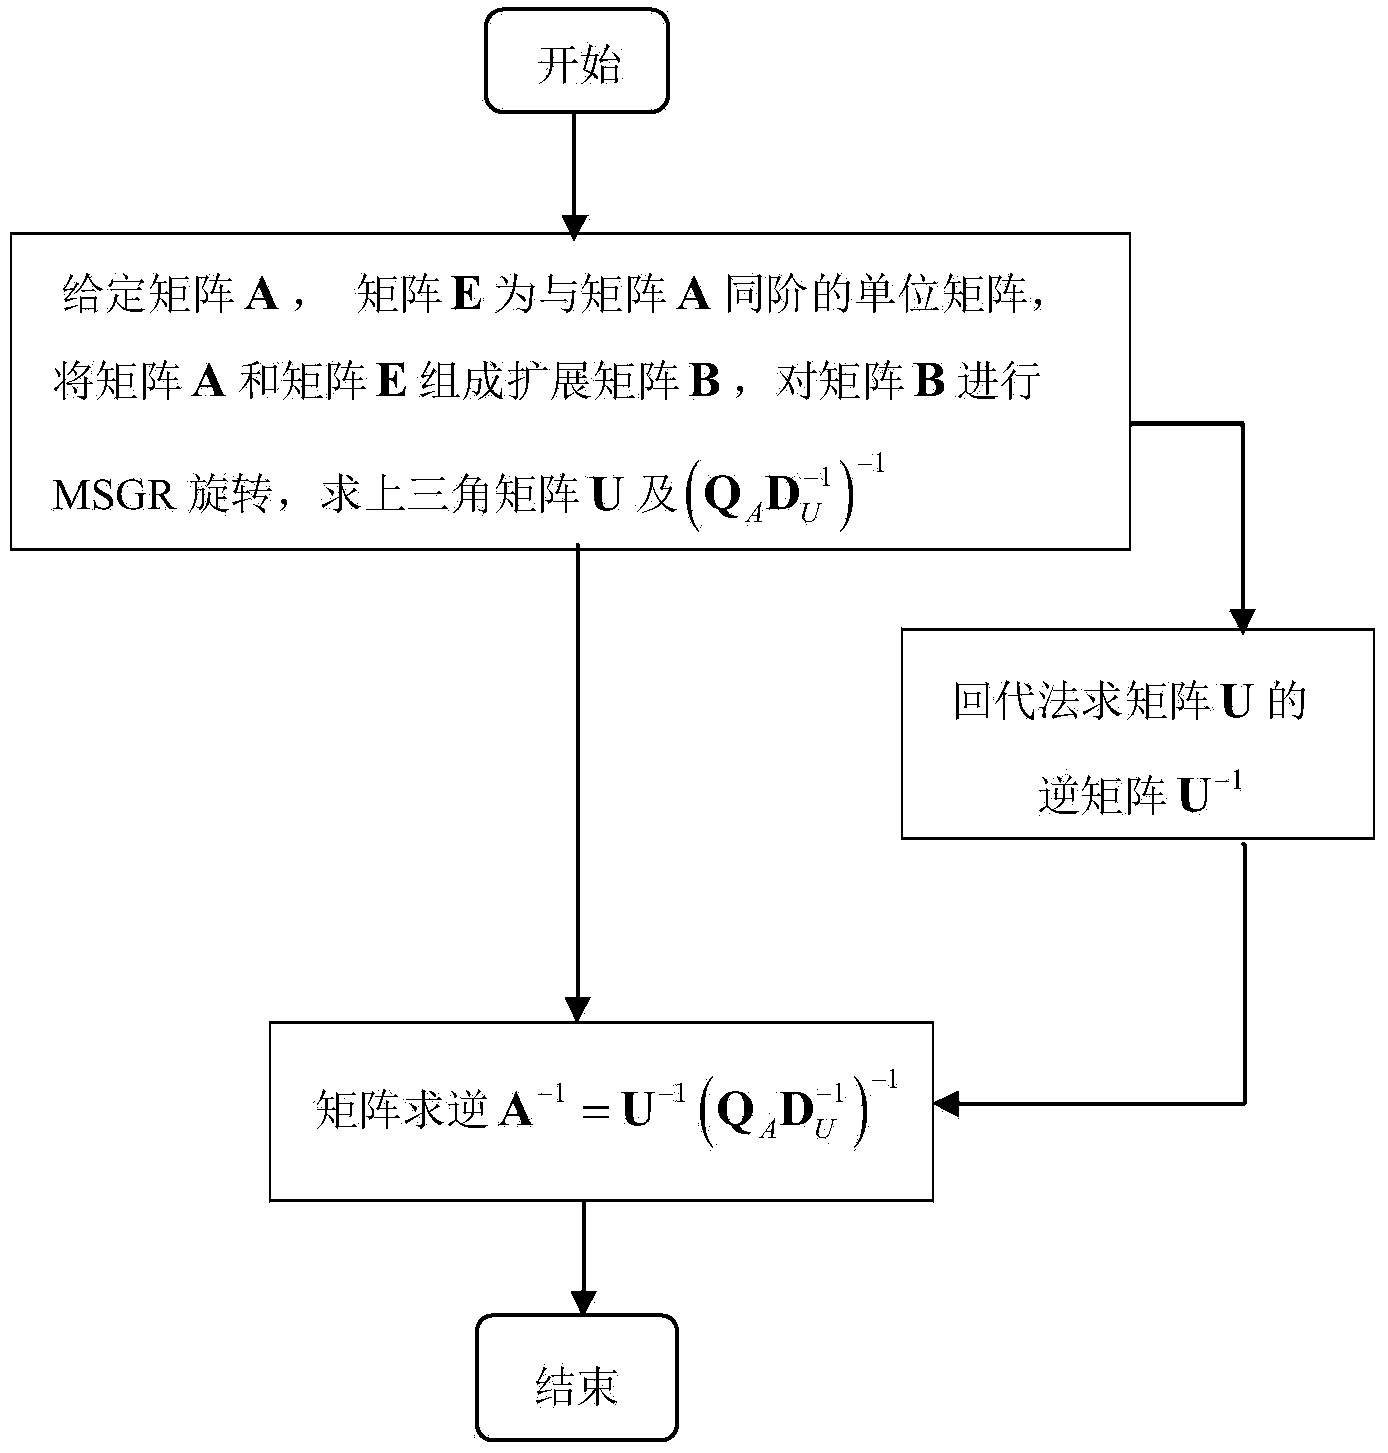 Low-complexity quick parallel matrix inversion method